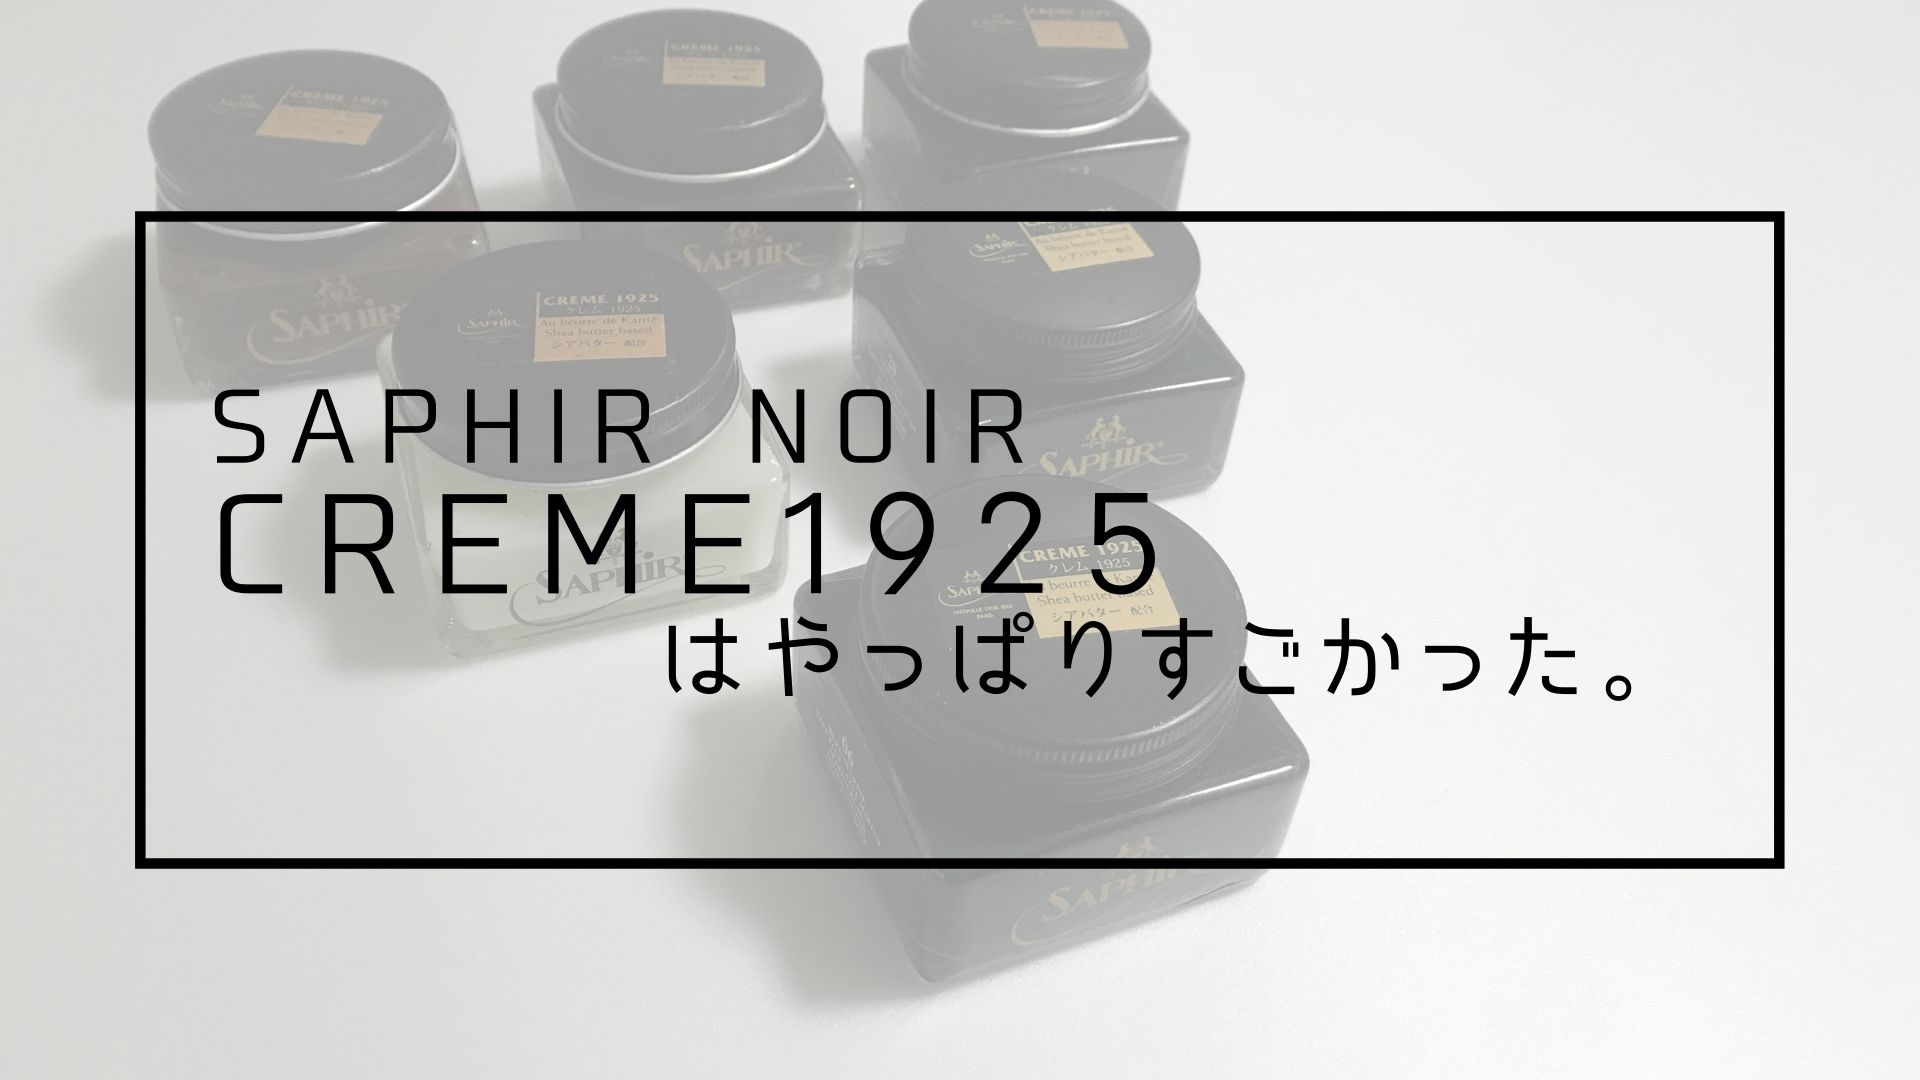 Saphir Noir Creme1925 はやっぱりすごかった。 | Lab.